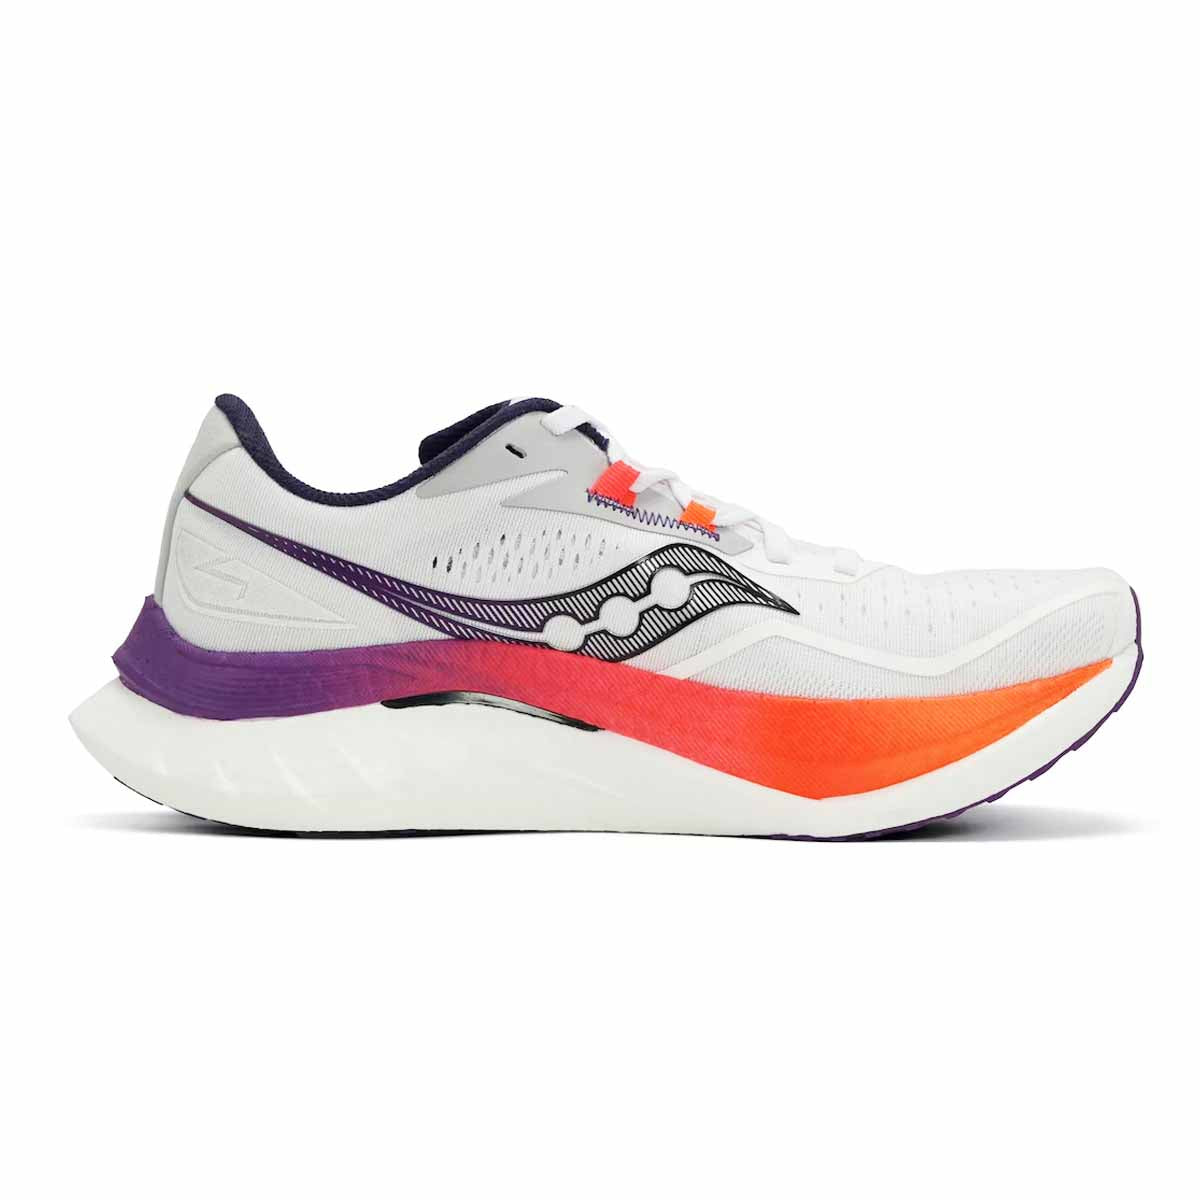 Saucony Endorphin Speed 4 Running Shoes - Mens - White/Viziorange